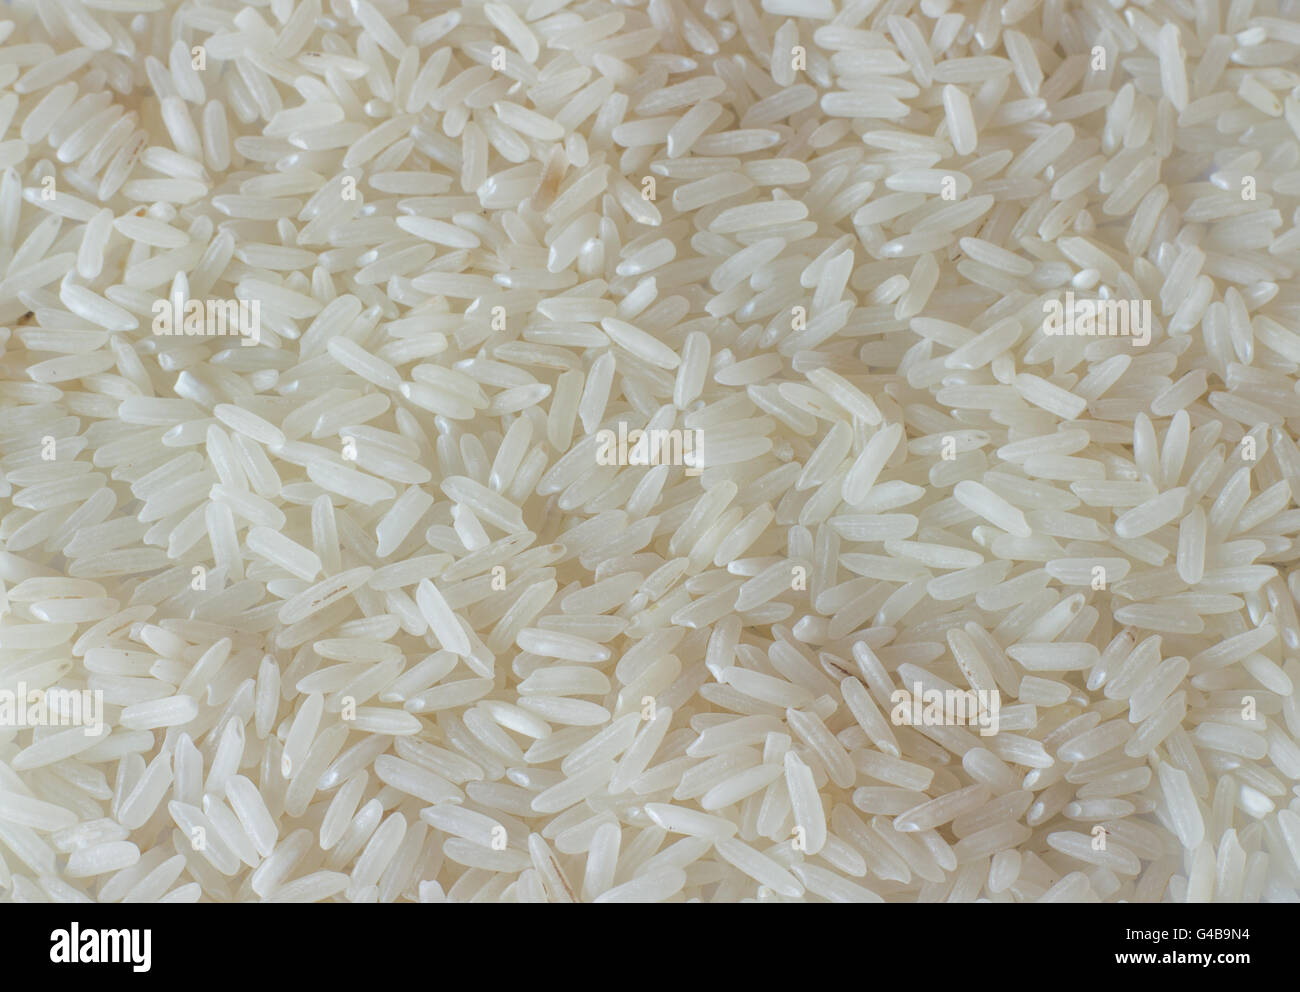 Raw Rice Stock Photos & Raw Rice Stock Images - Alamy